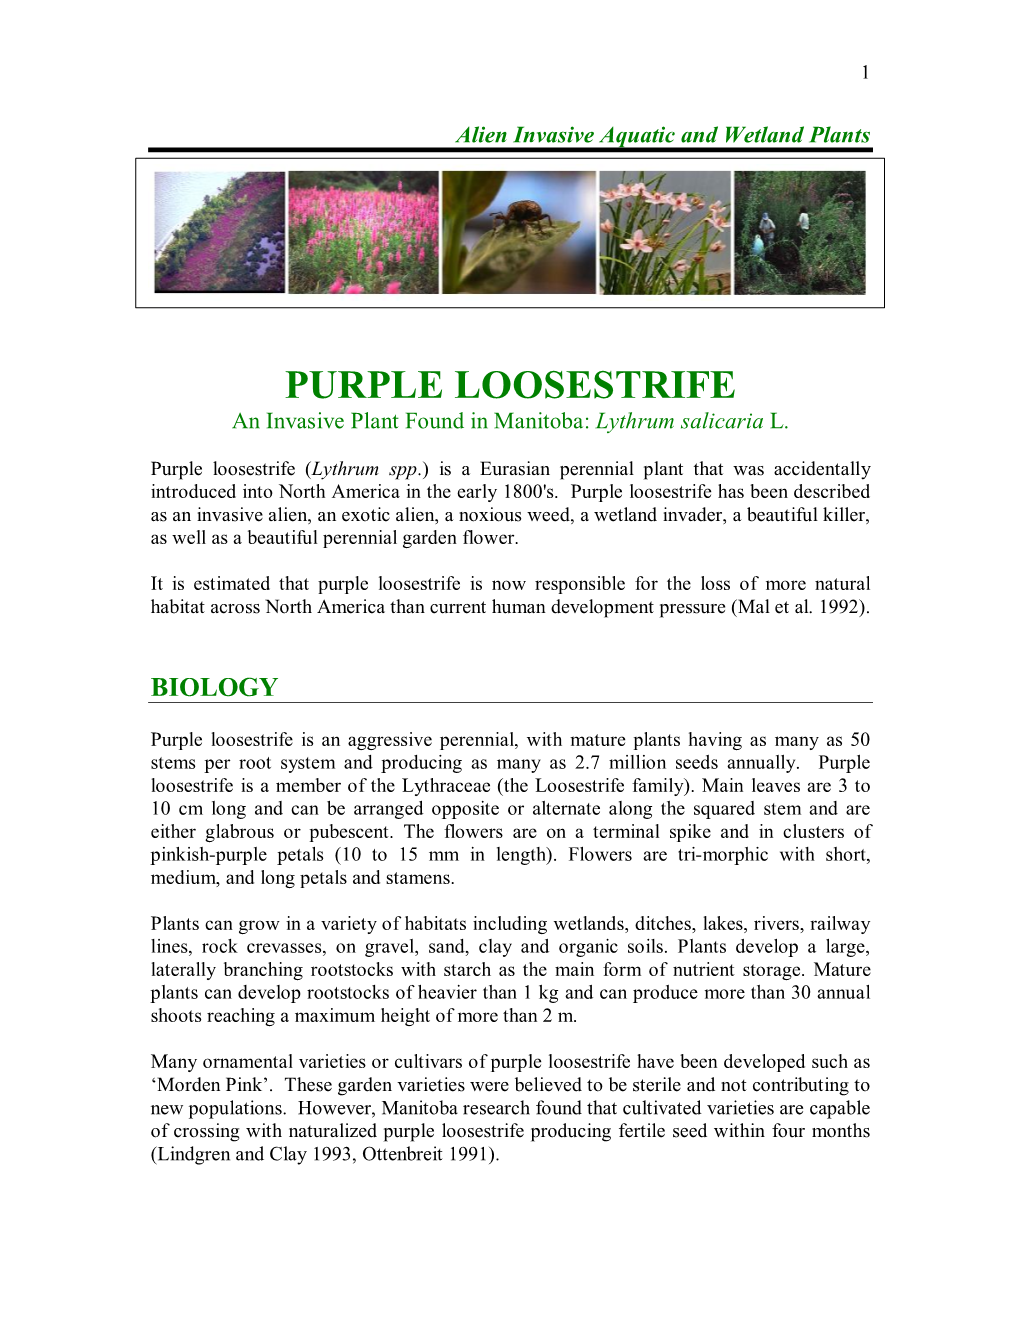 PURPLE LOOSESTRIFE an Invasive Plant Found in Manitoba: Lythrum Salicaria L